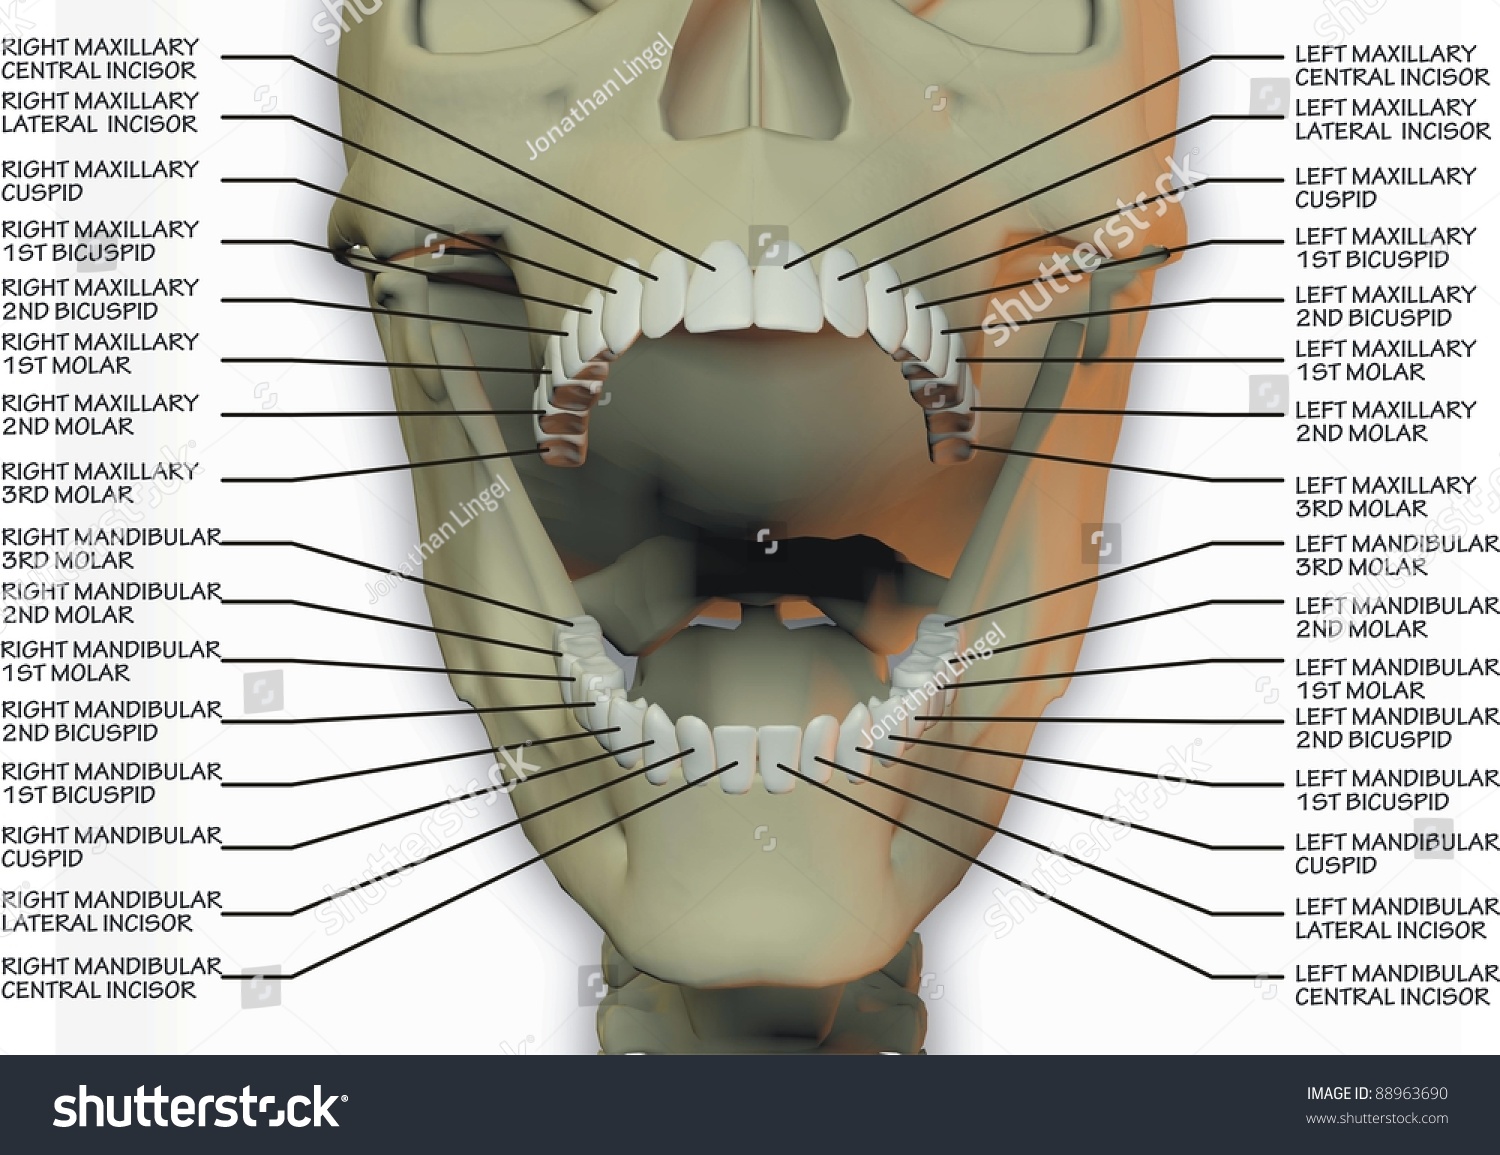 Human Dental Schematic. Stock Photo 88963690 : Shutterstock